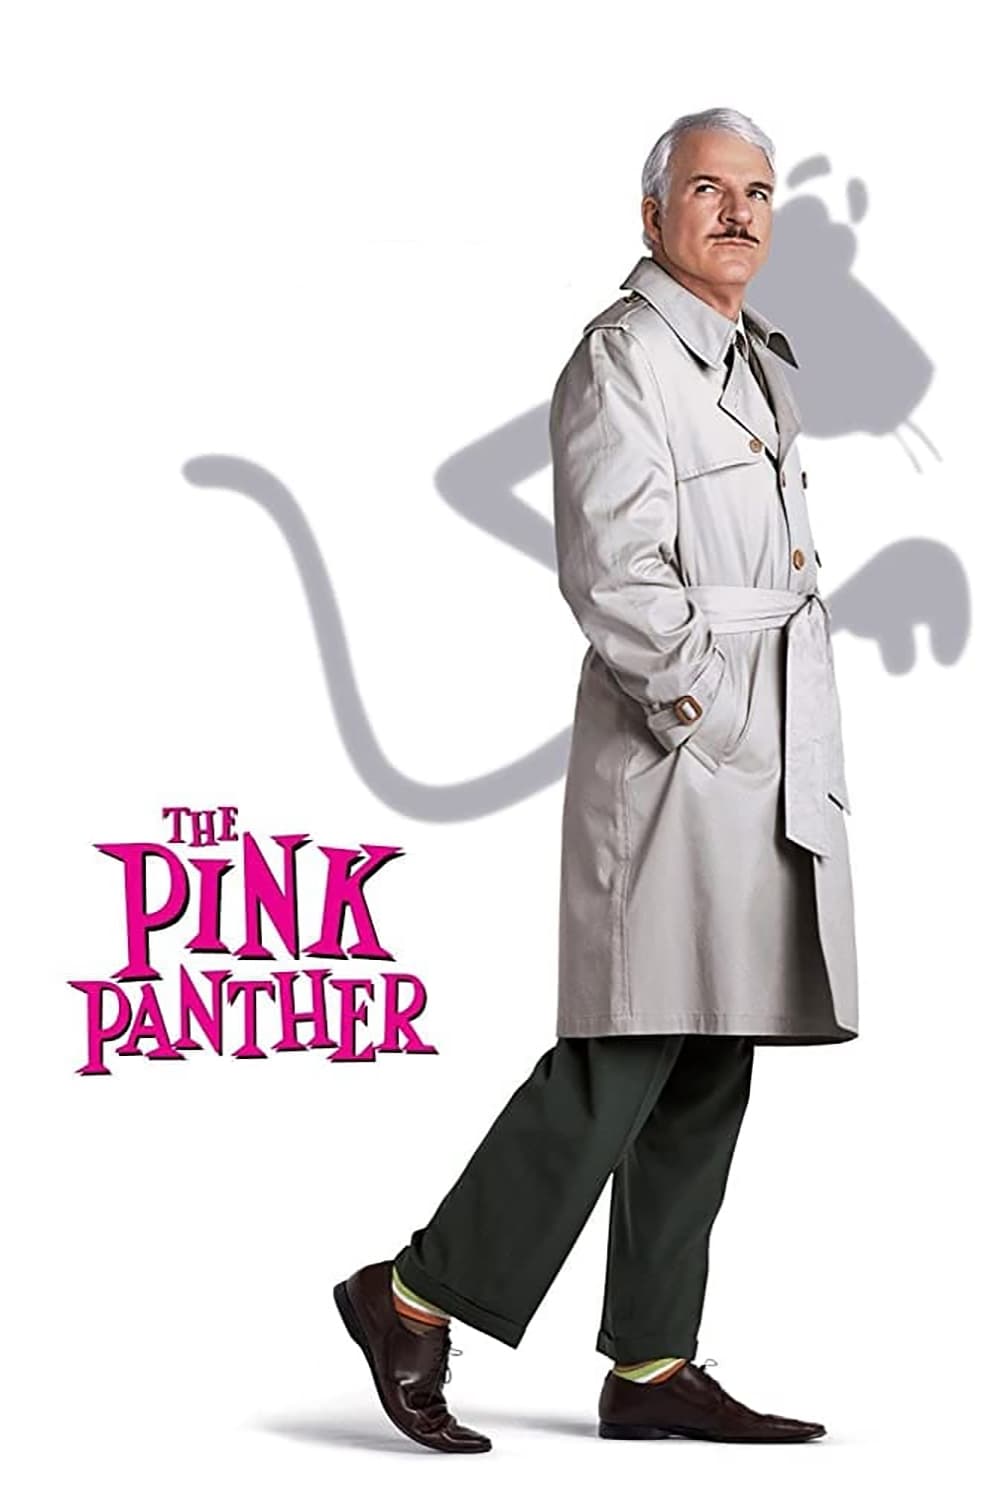 Der rosarote Panther (2006)